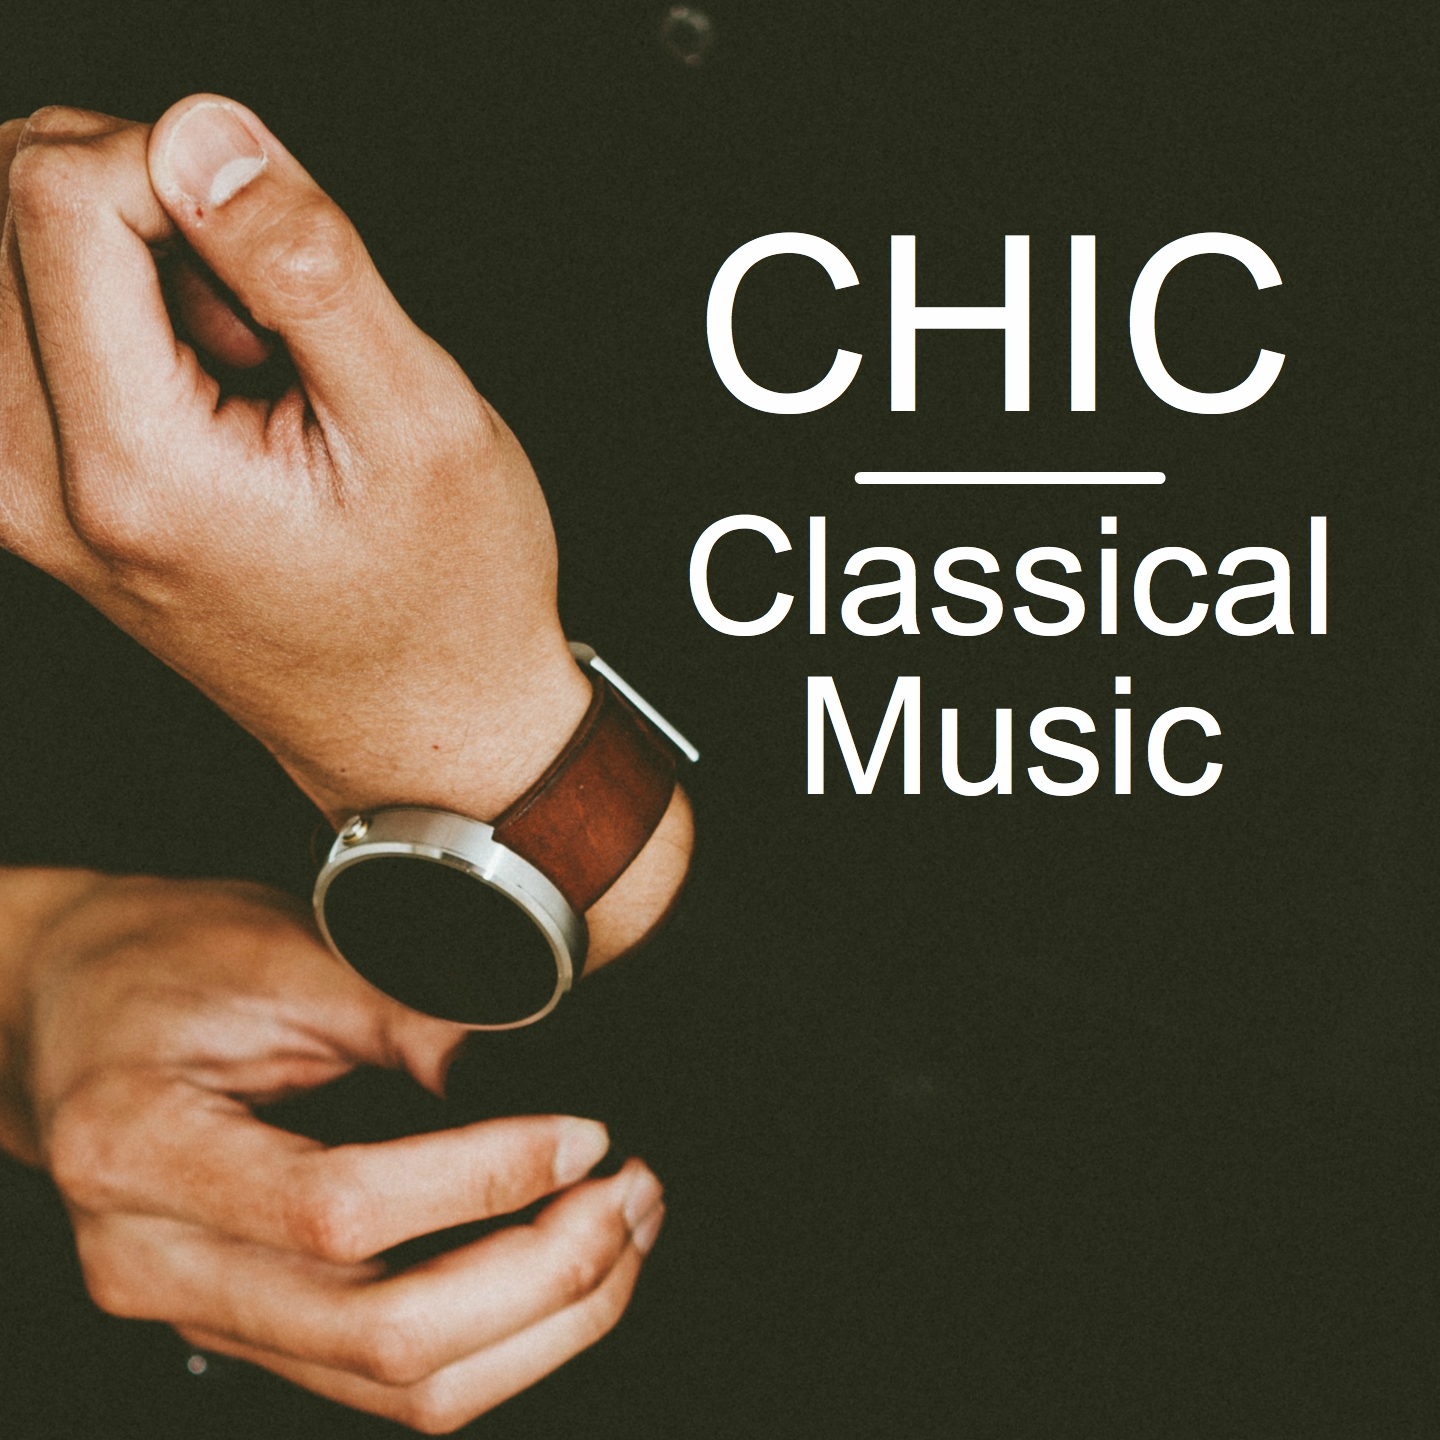 Chic Classical Music